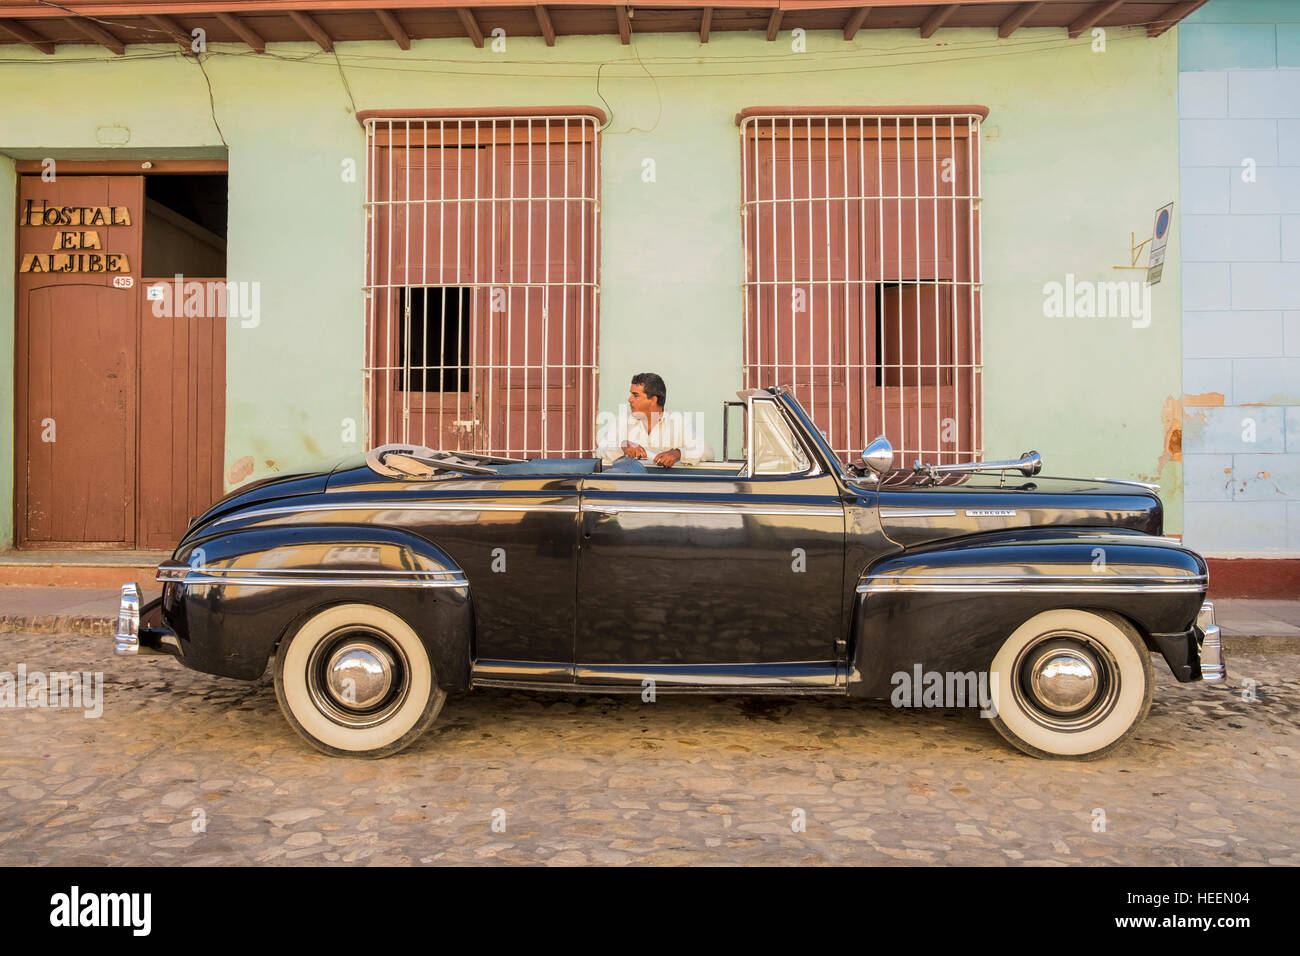 Mercury eight, classic old american car, taxi, Trinidad, Cuba Stock Photo